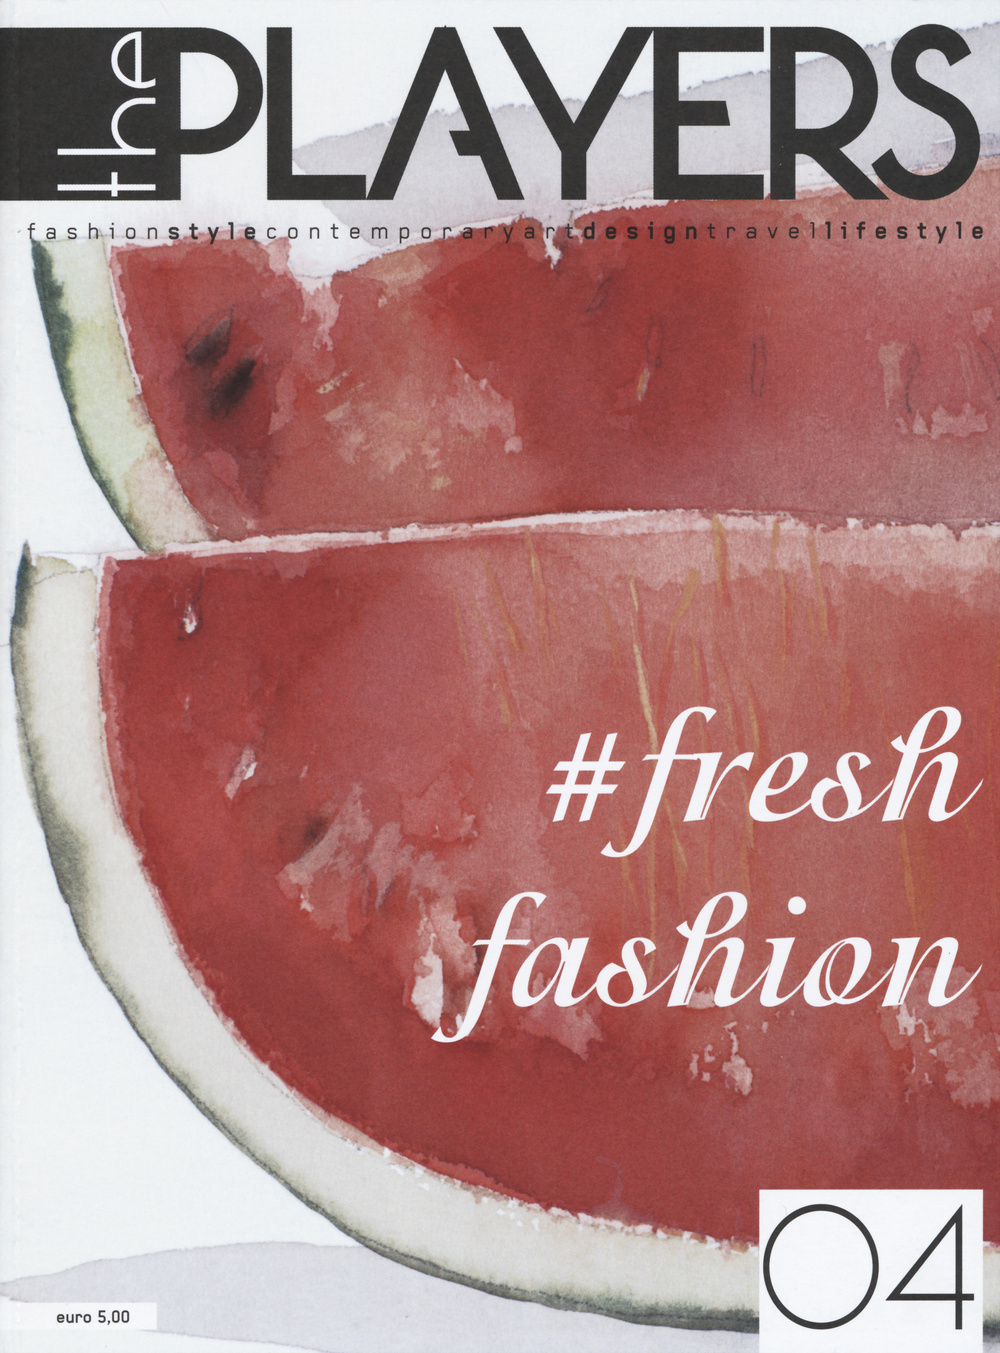 The players. Magazine. Fashion style, contemporary art, design, travel, lifestyle. Vol. 4: Fresh fashion